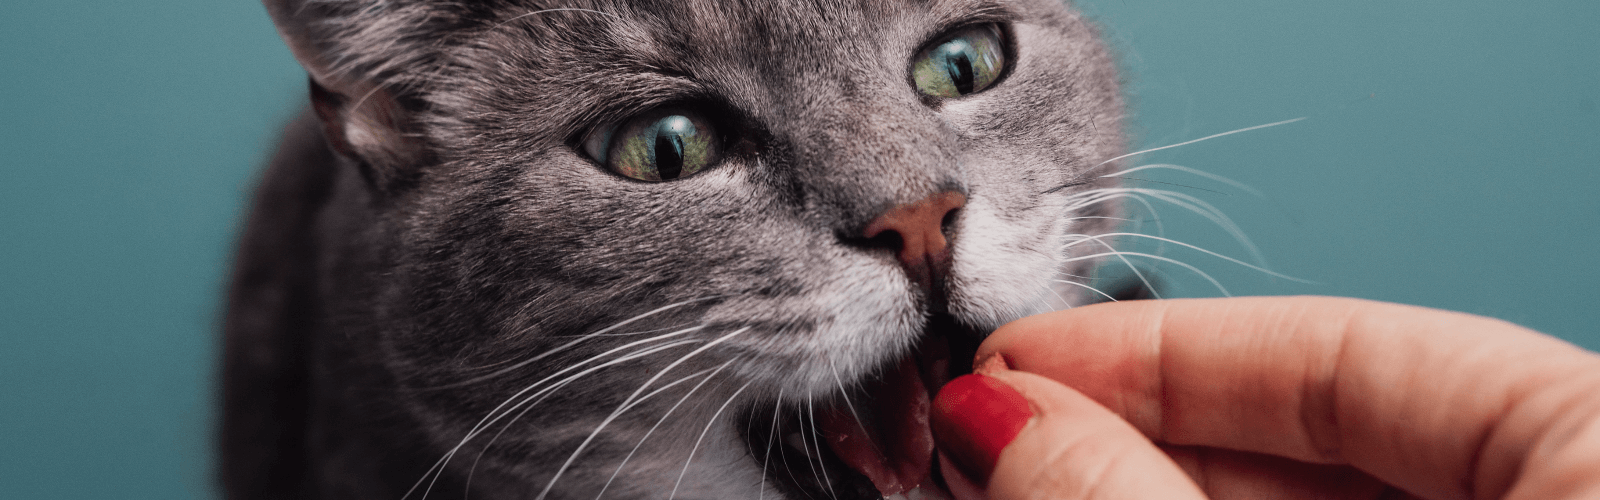 Cat eating treat